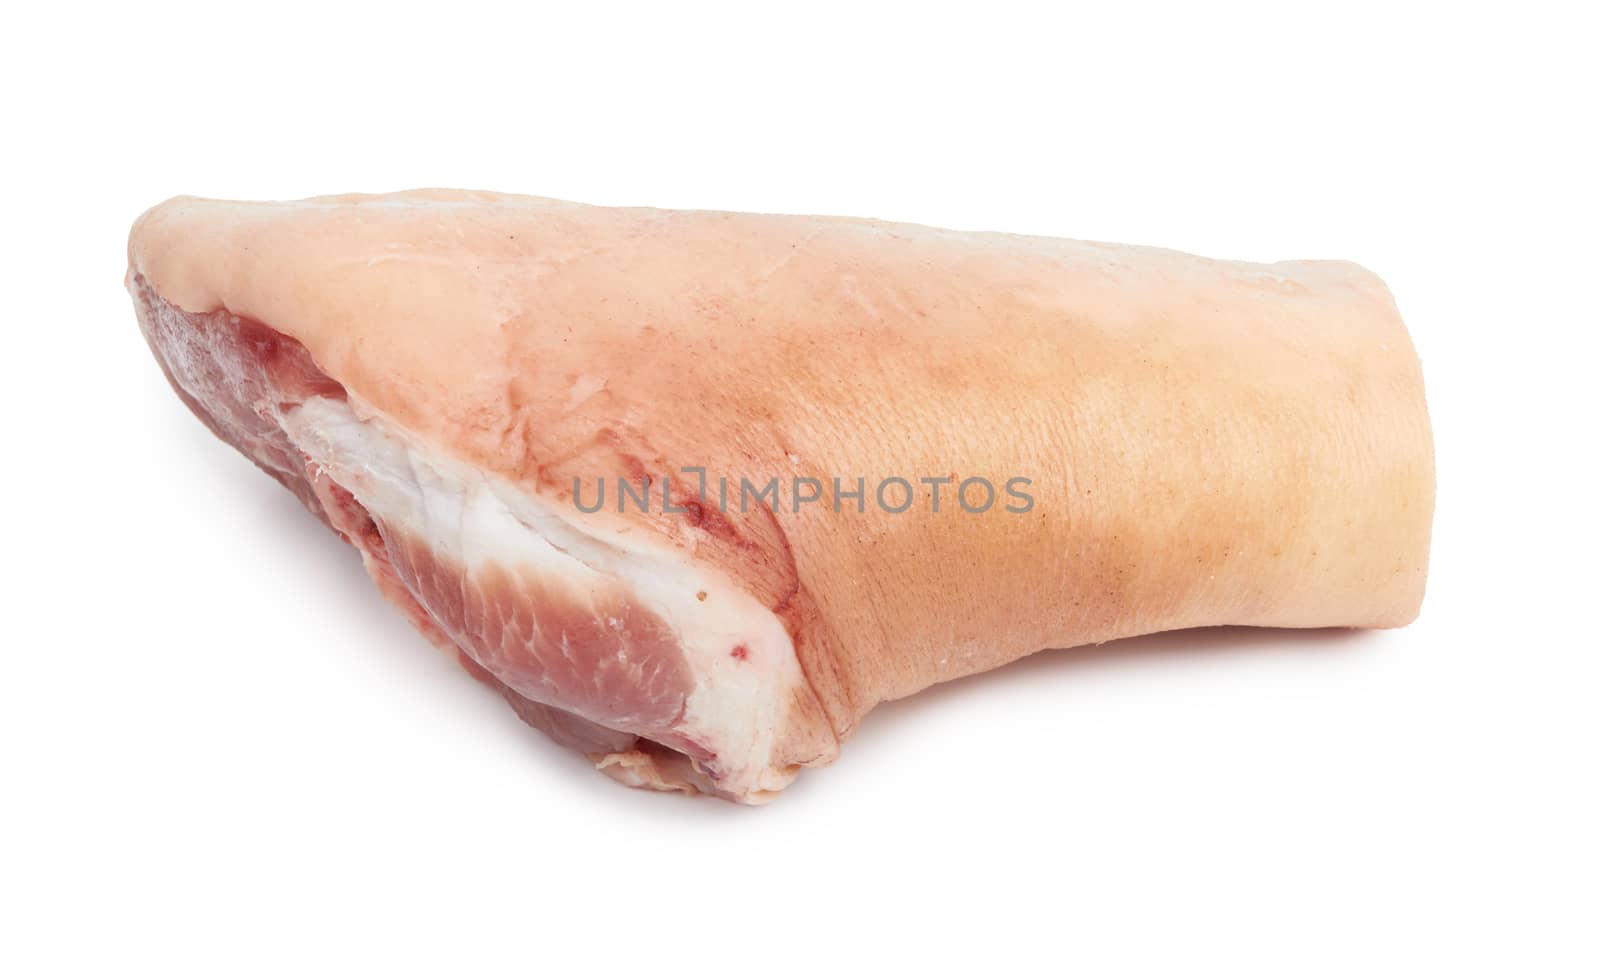 Fresh pork knuckle on a white background